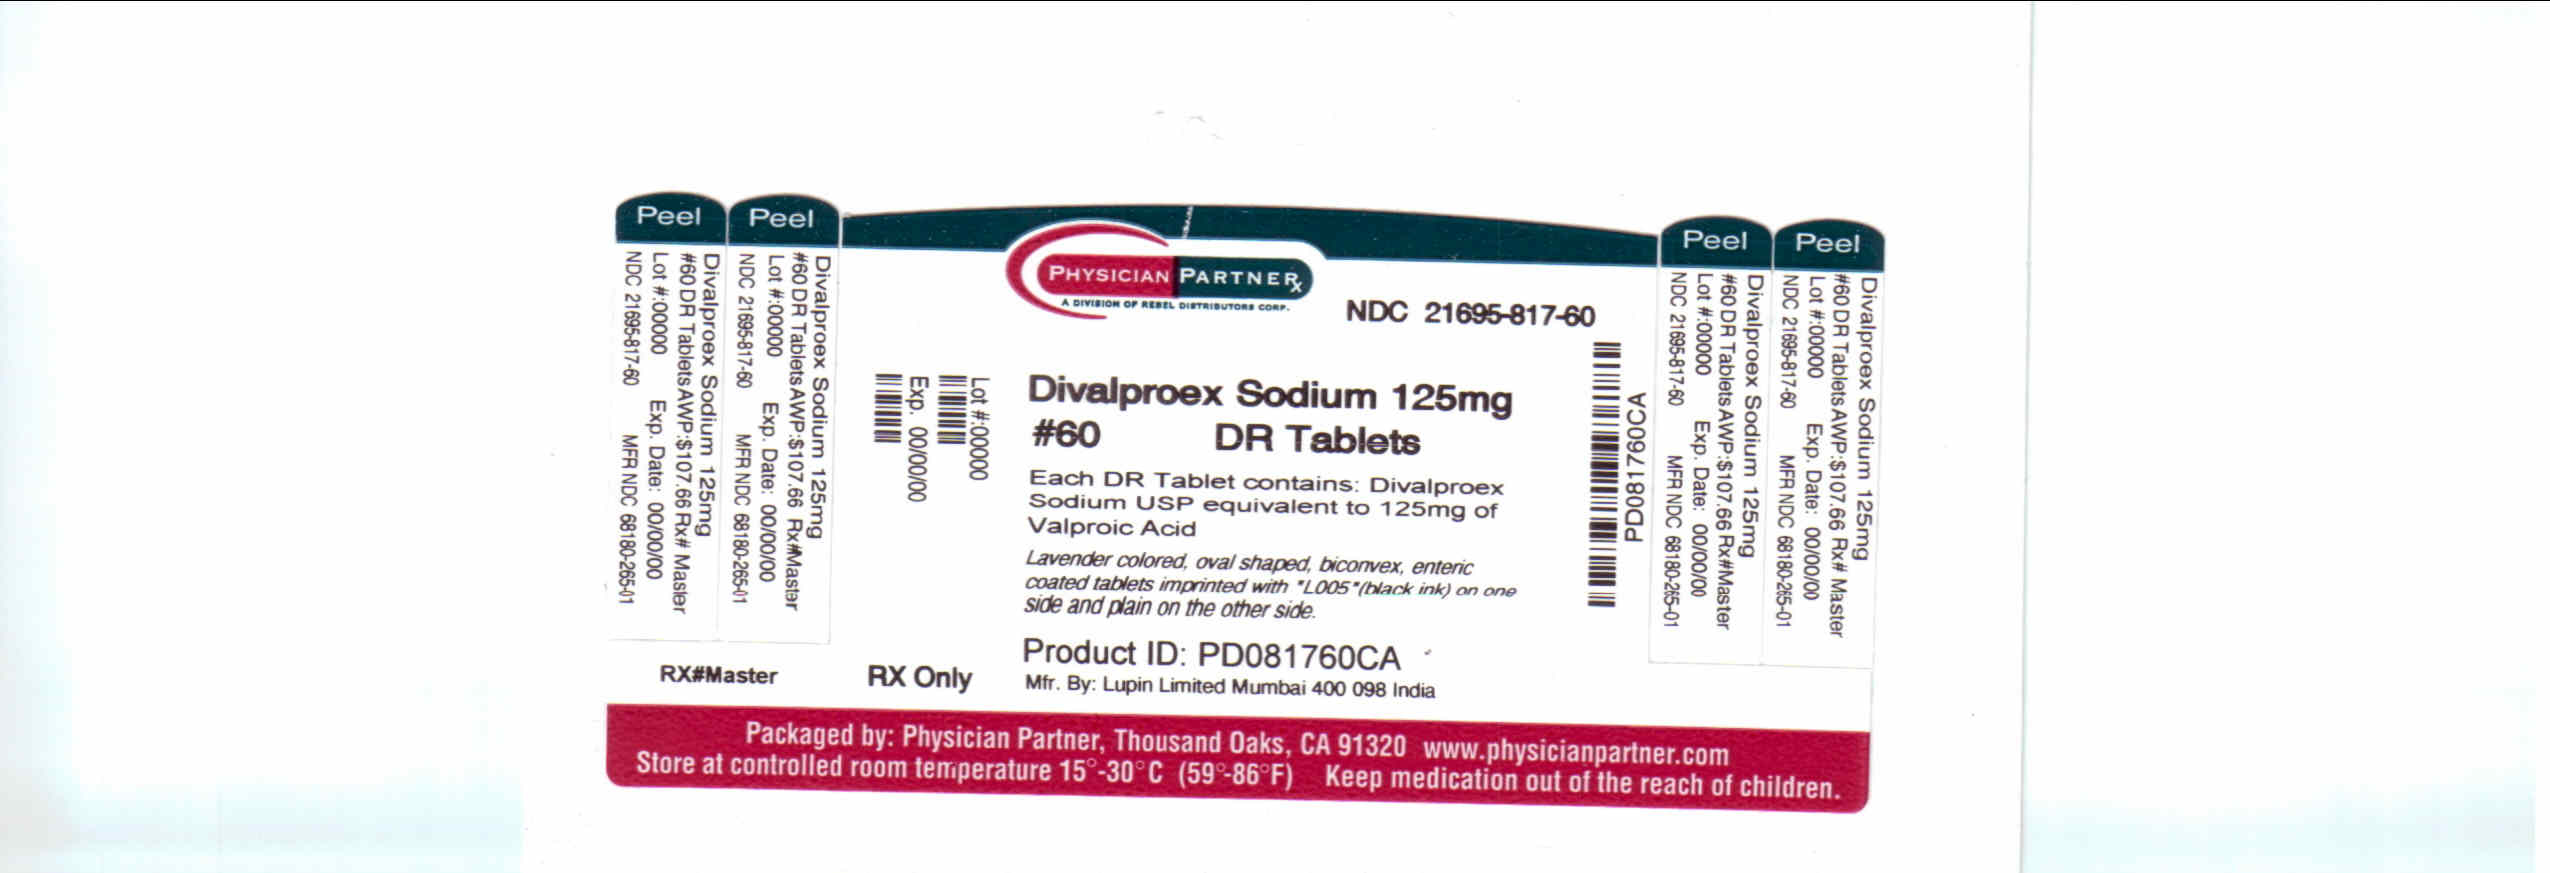 Divalproex Sodium 125mg